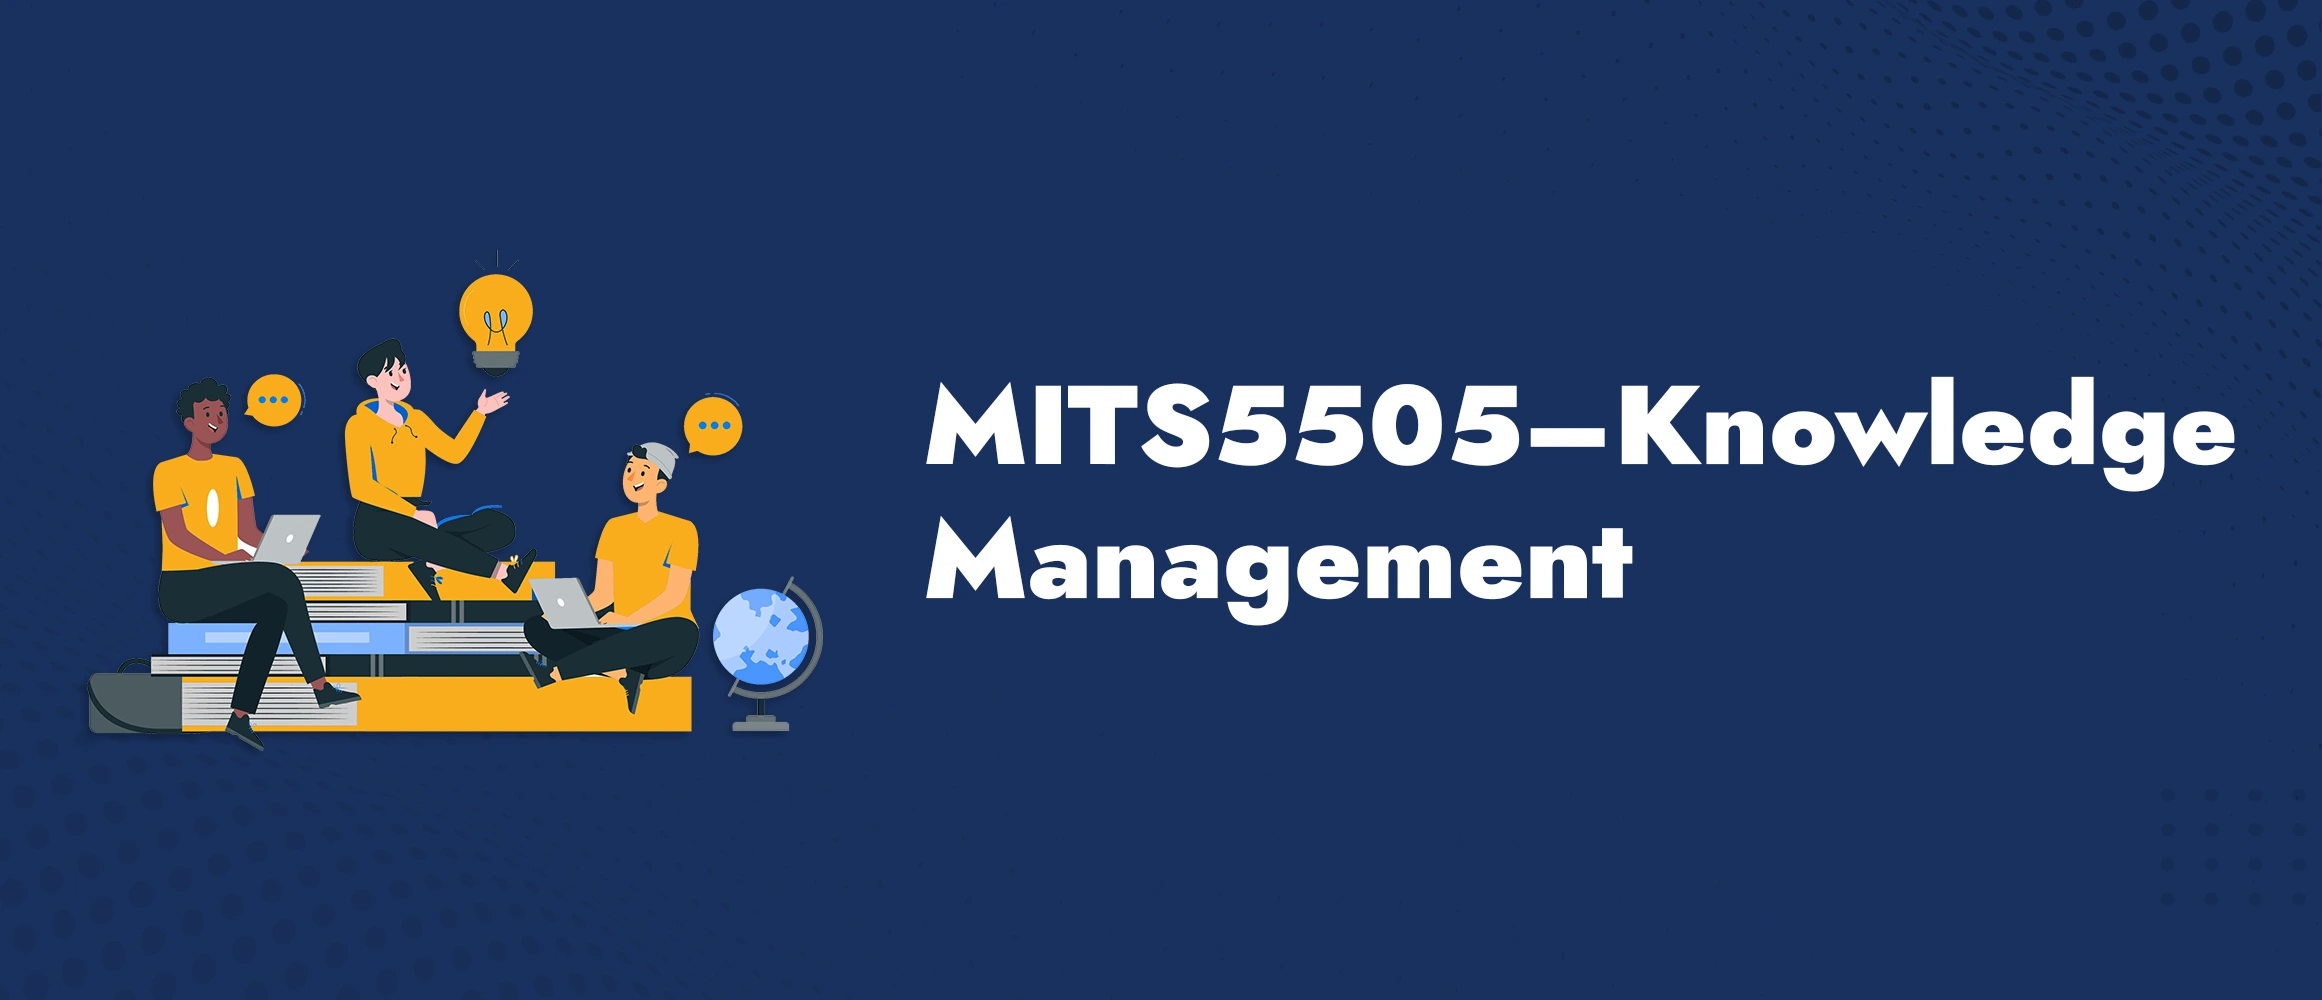 MITS5505 Knowledge Management